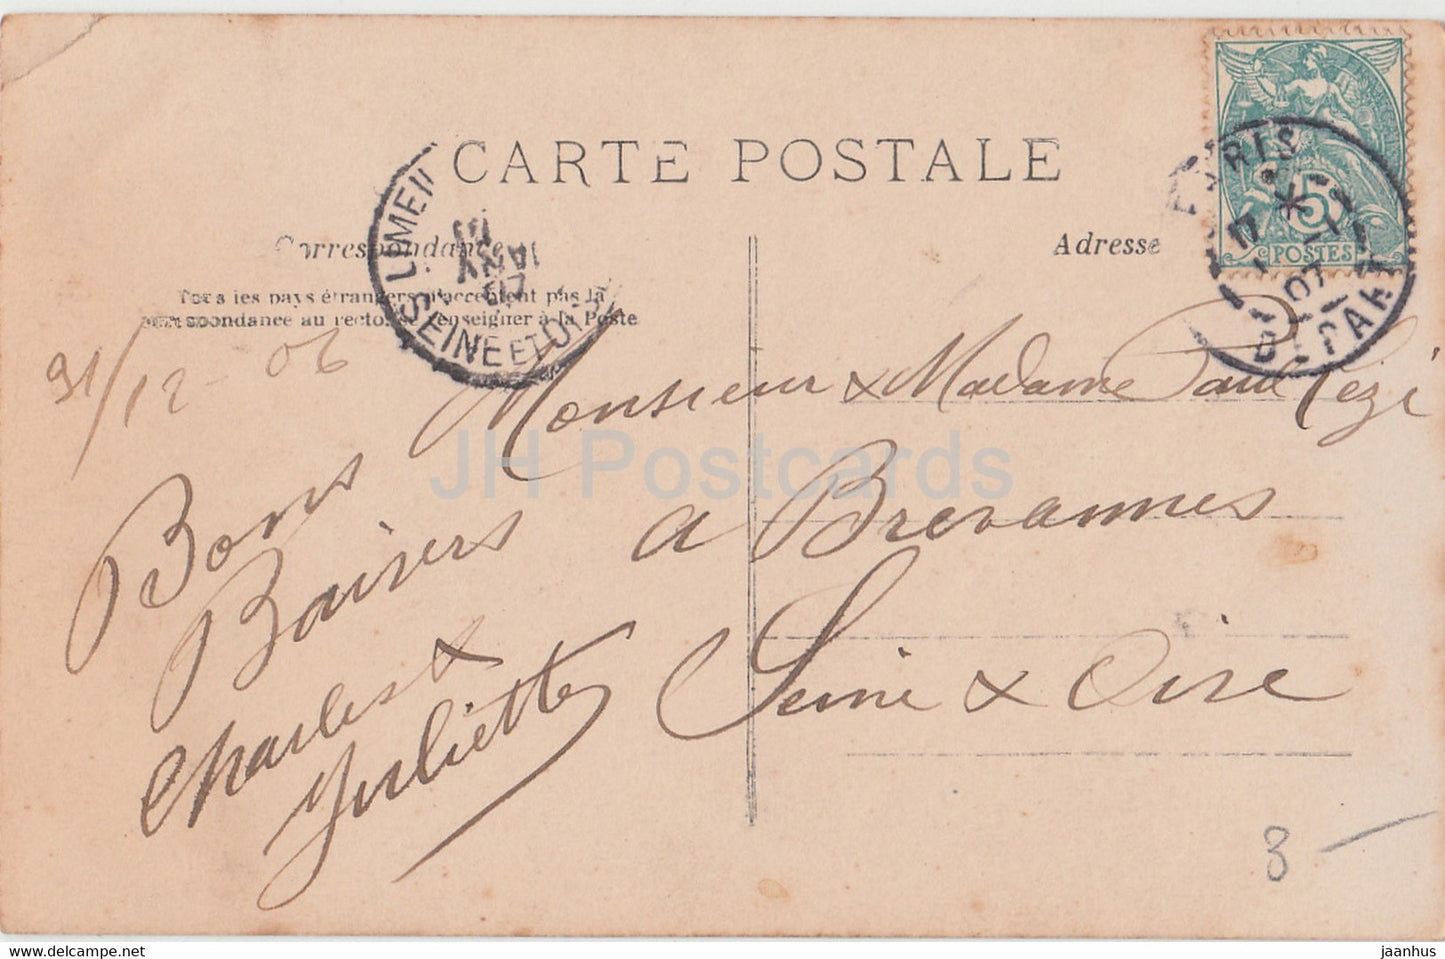 New Year Greeting Card - J'apporte la Joie et l'Esperance - girl - old postcard - 1907 - France - used